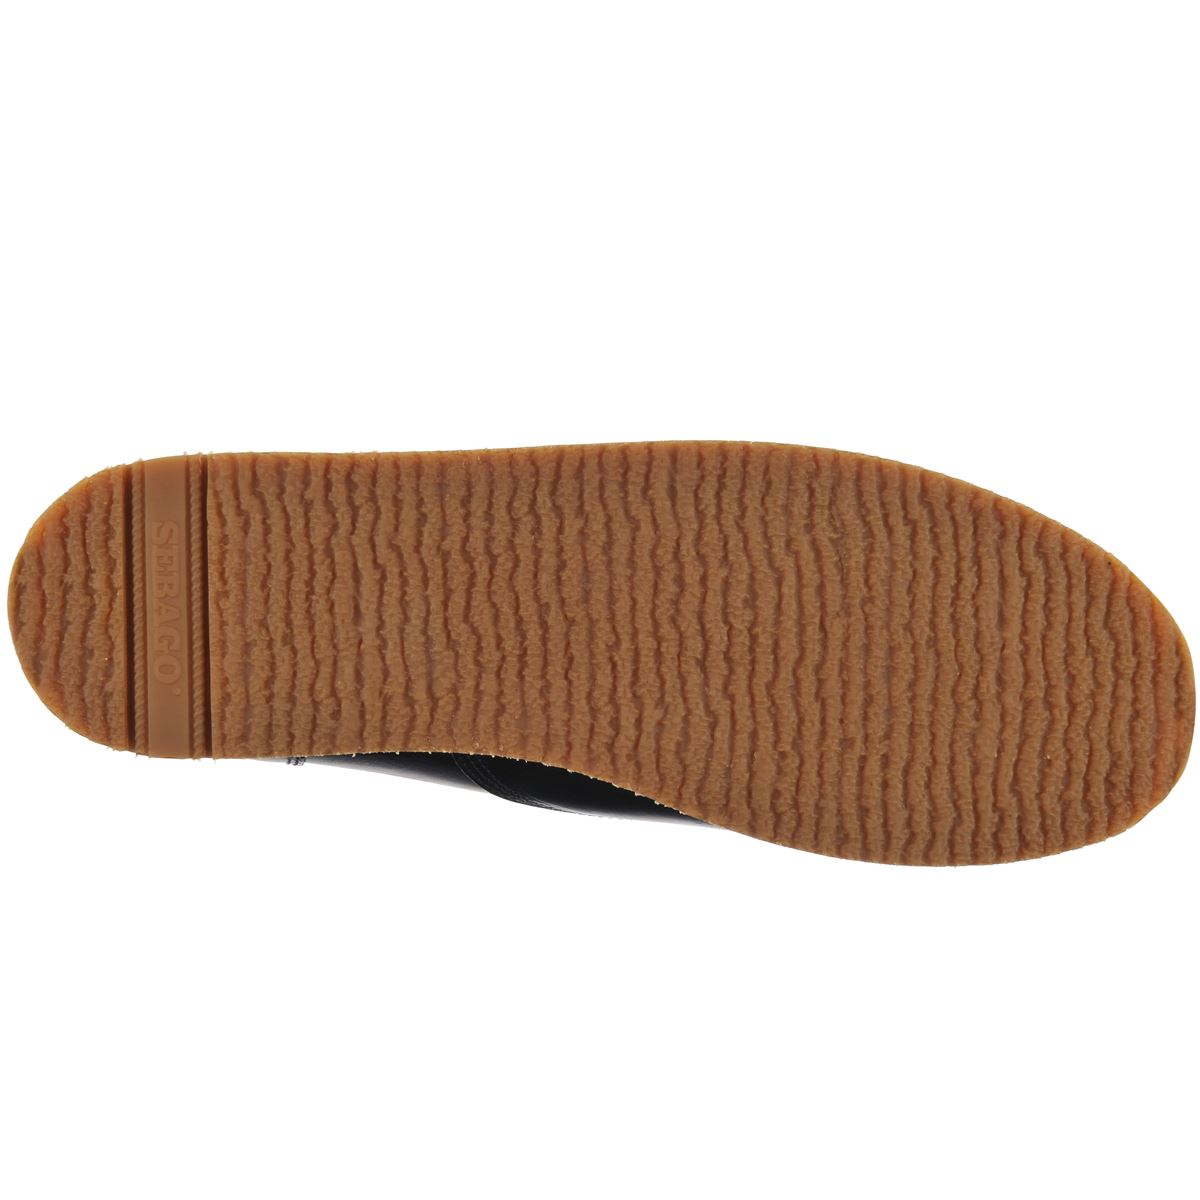 Sebago - Shoe Rogden Boot Millerain BluNavy/Ocra